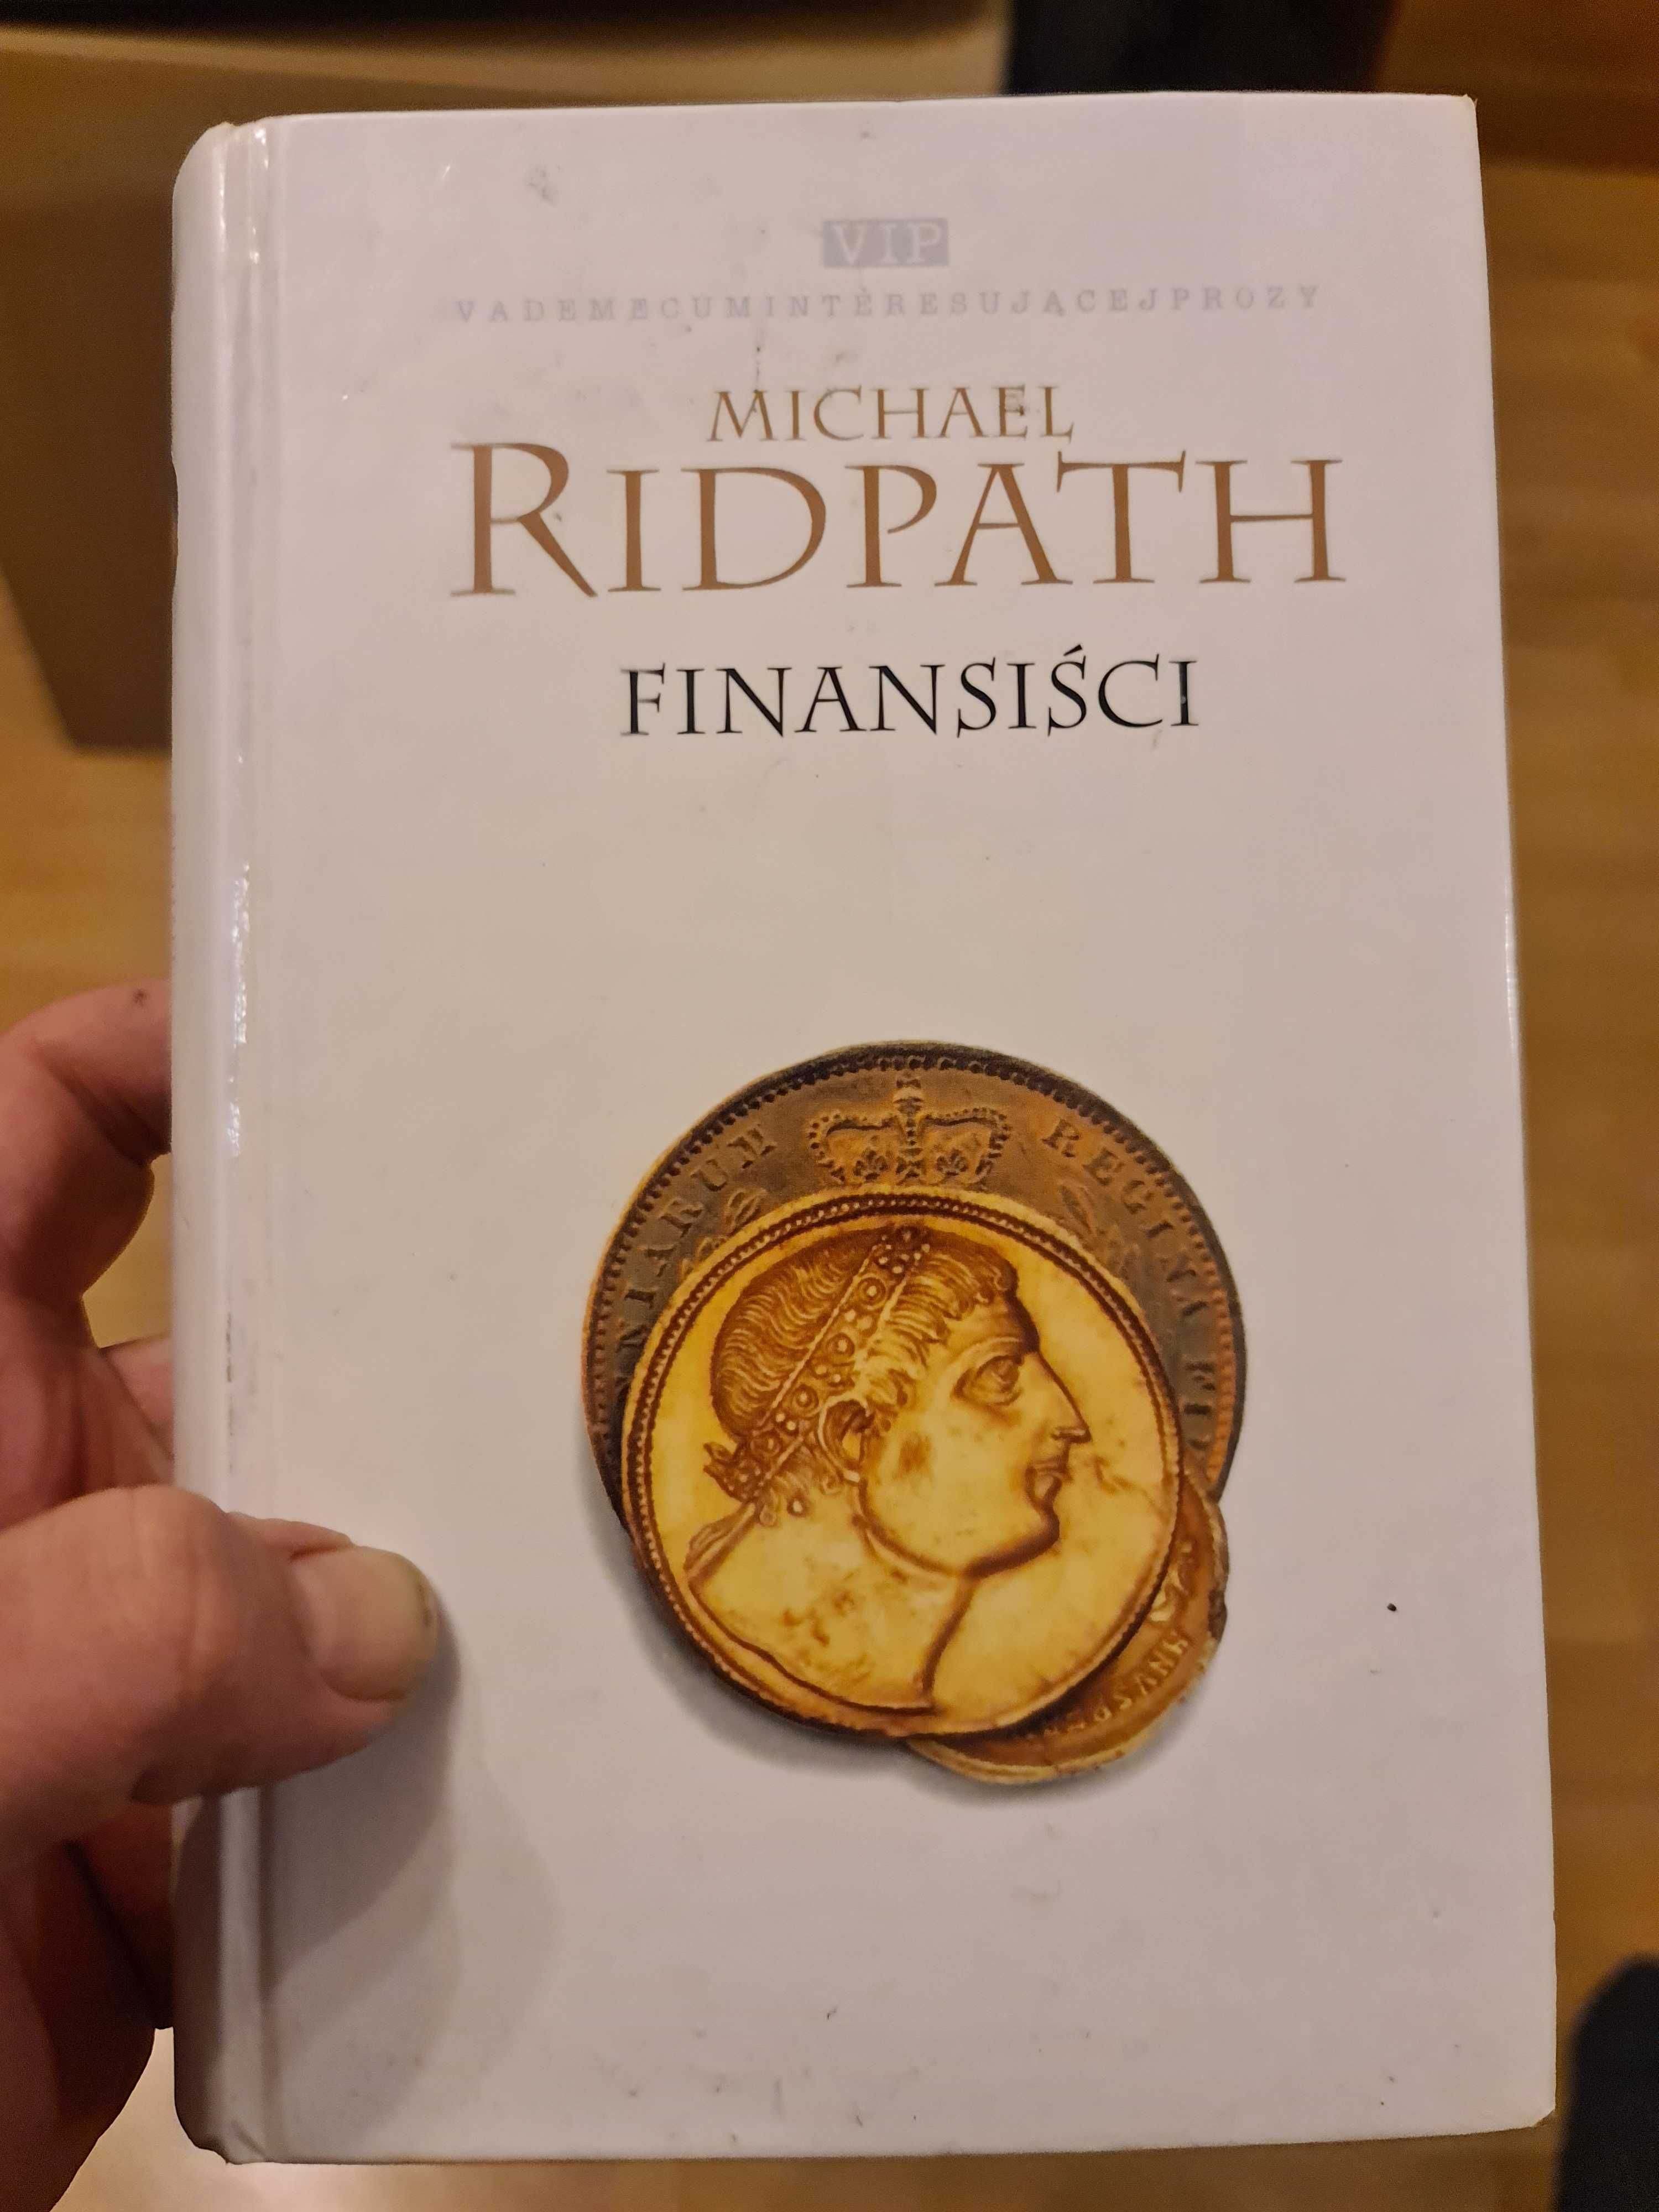 książka "Finansiści" Michael Ridpatch, stan bdb